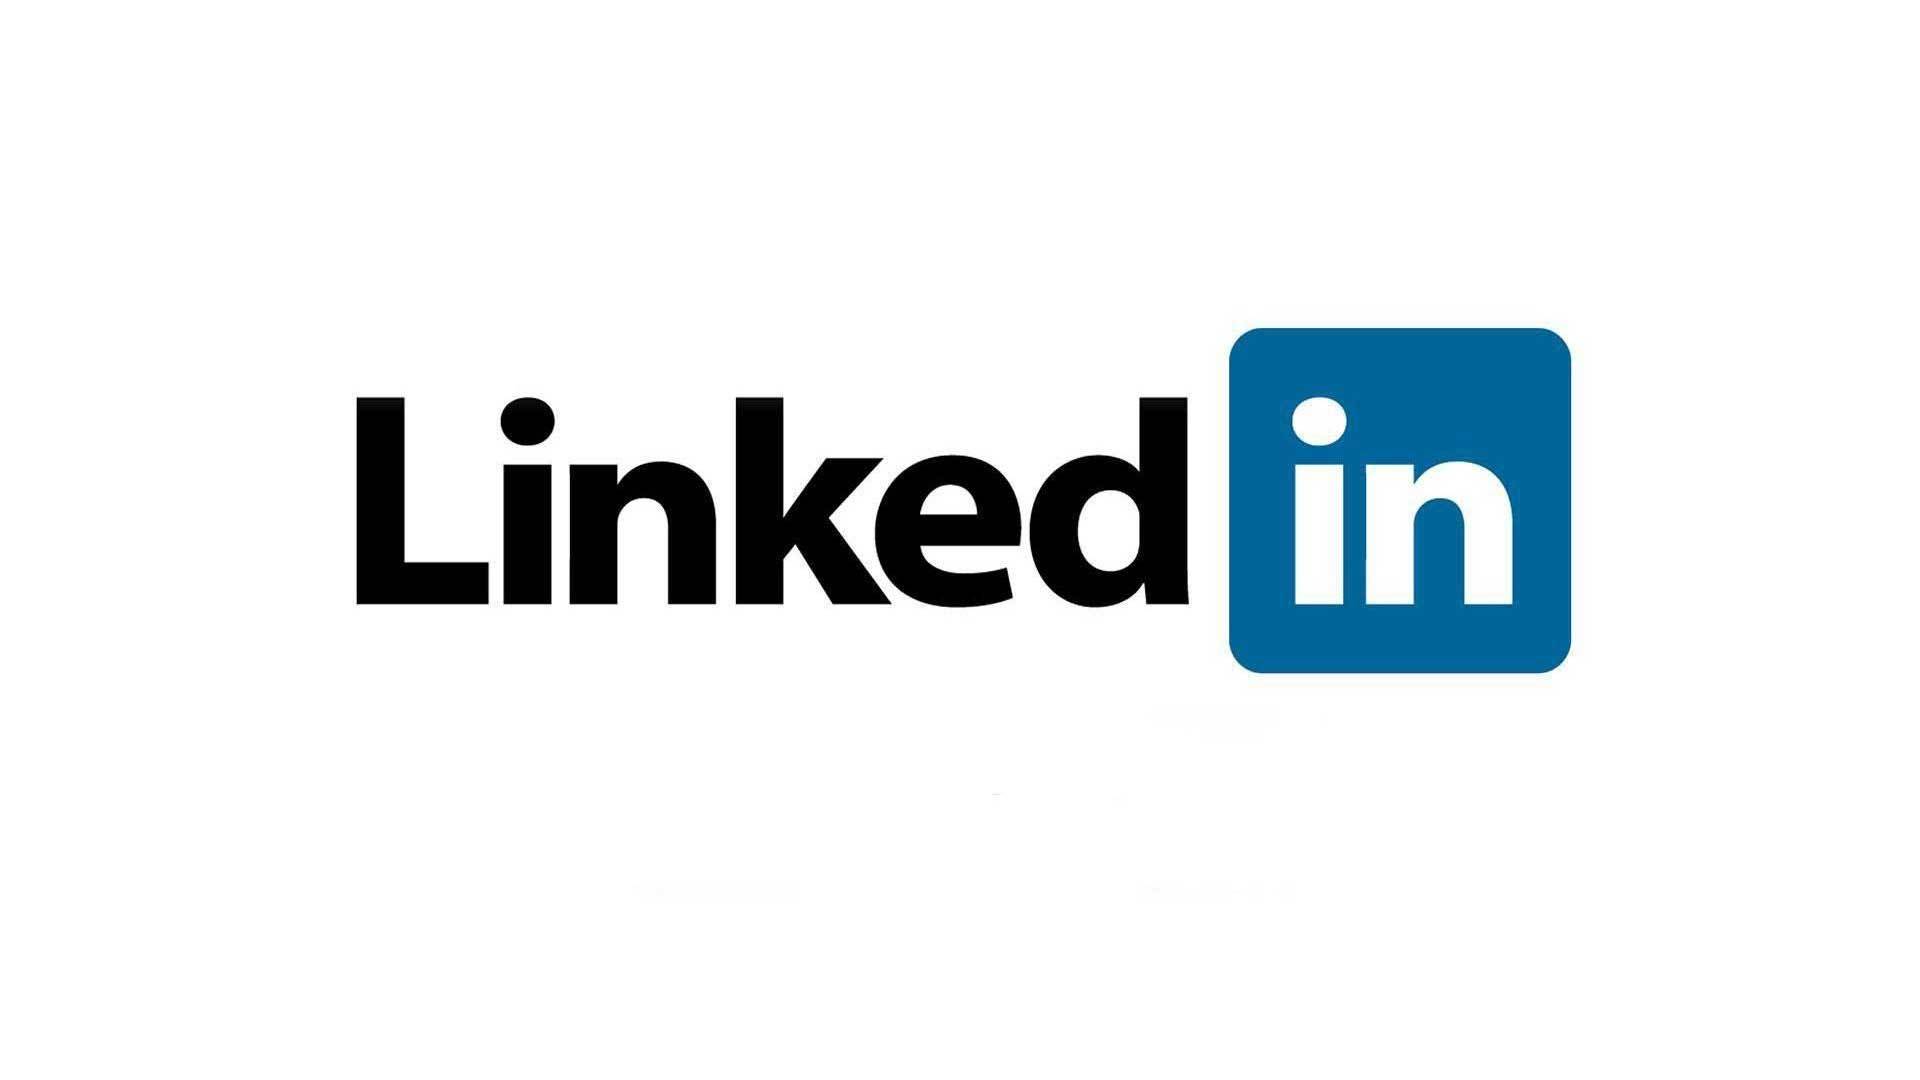 LinkedIn Logo Desktop Wallpaper 65635 1920x1080px